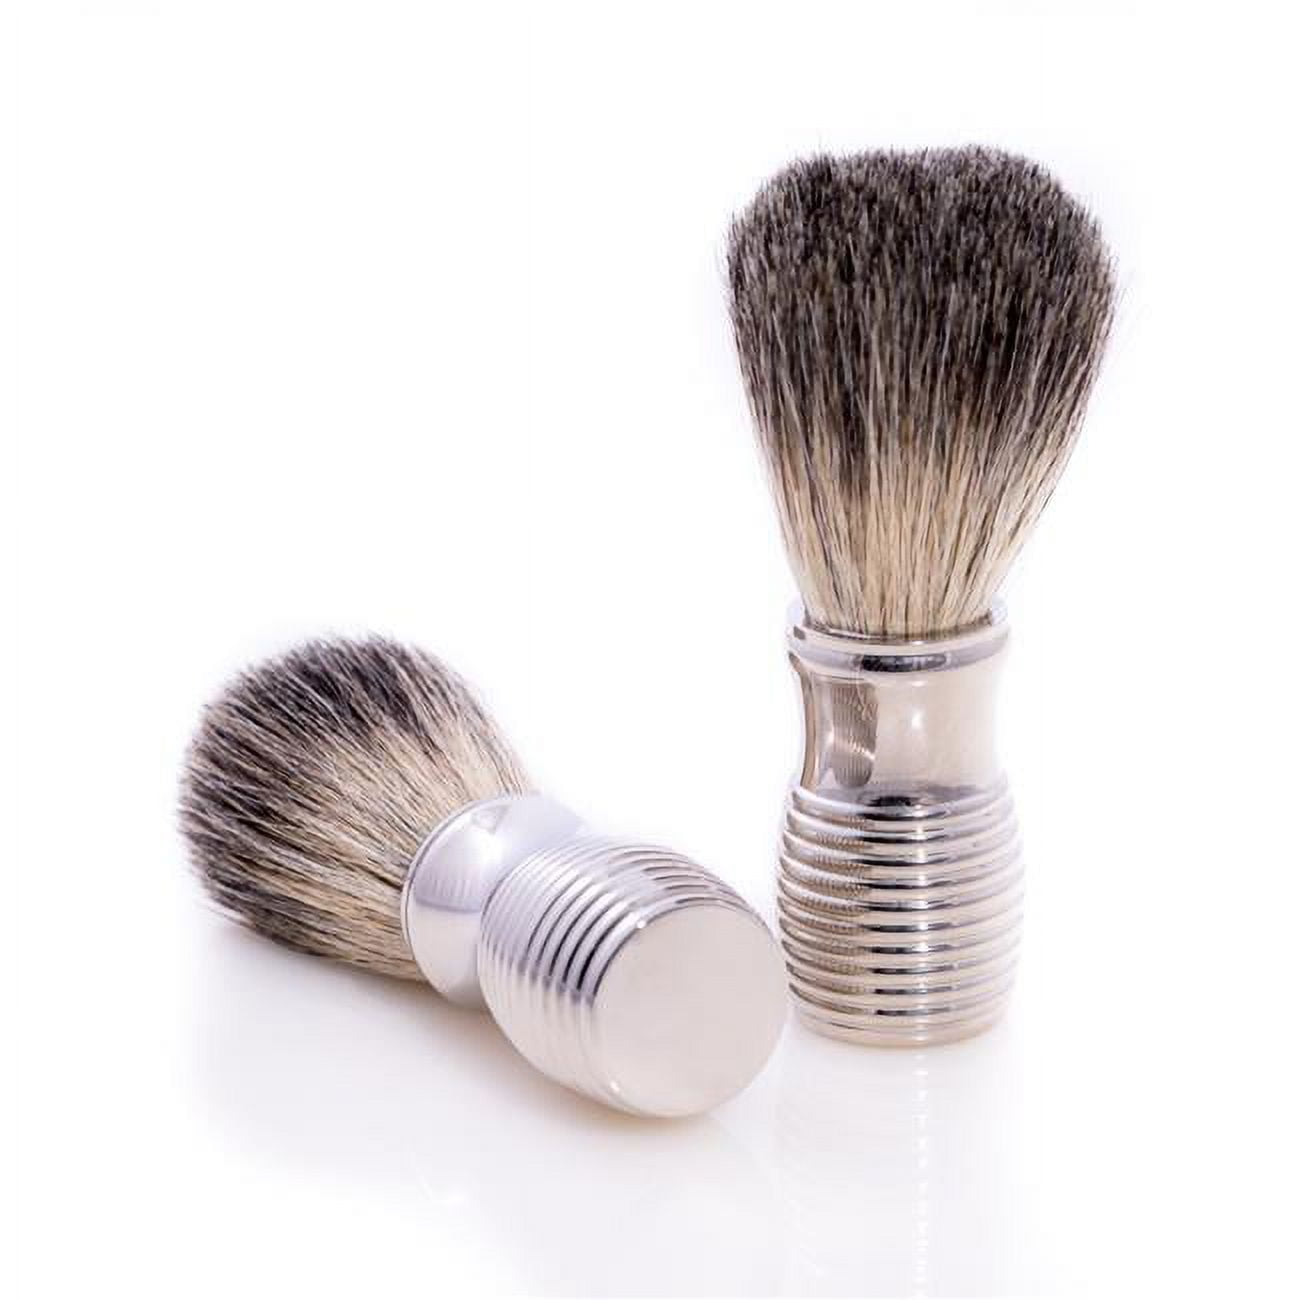 Bey-berk International Bb50 Pure Badger Shaving Brush With Chrome Handle, Silver